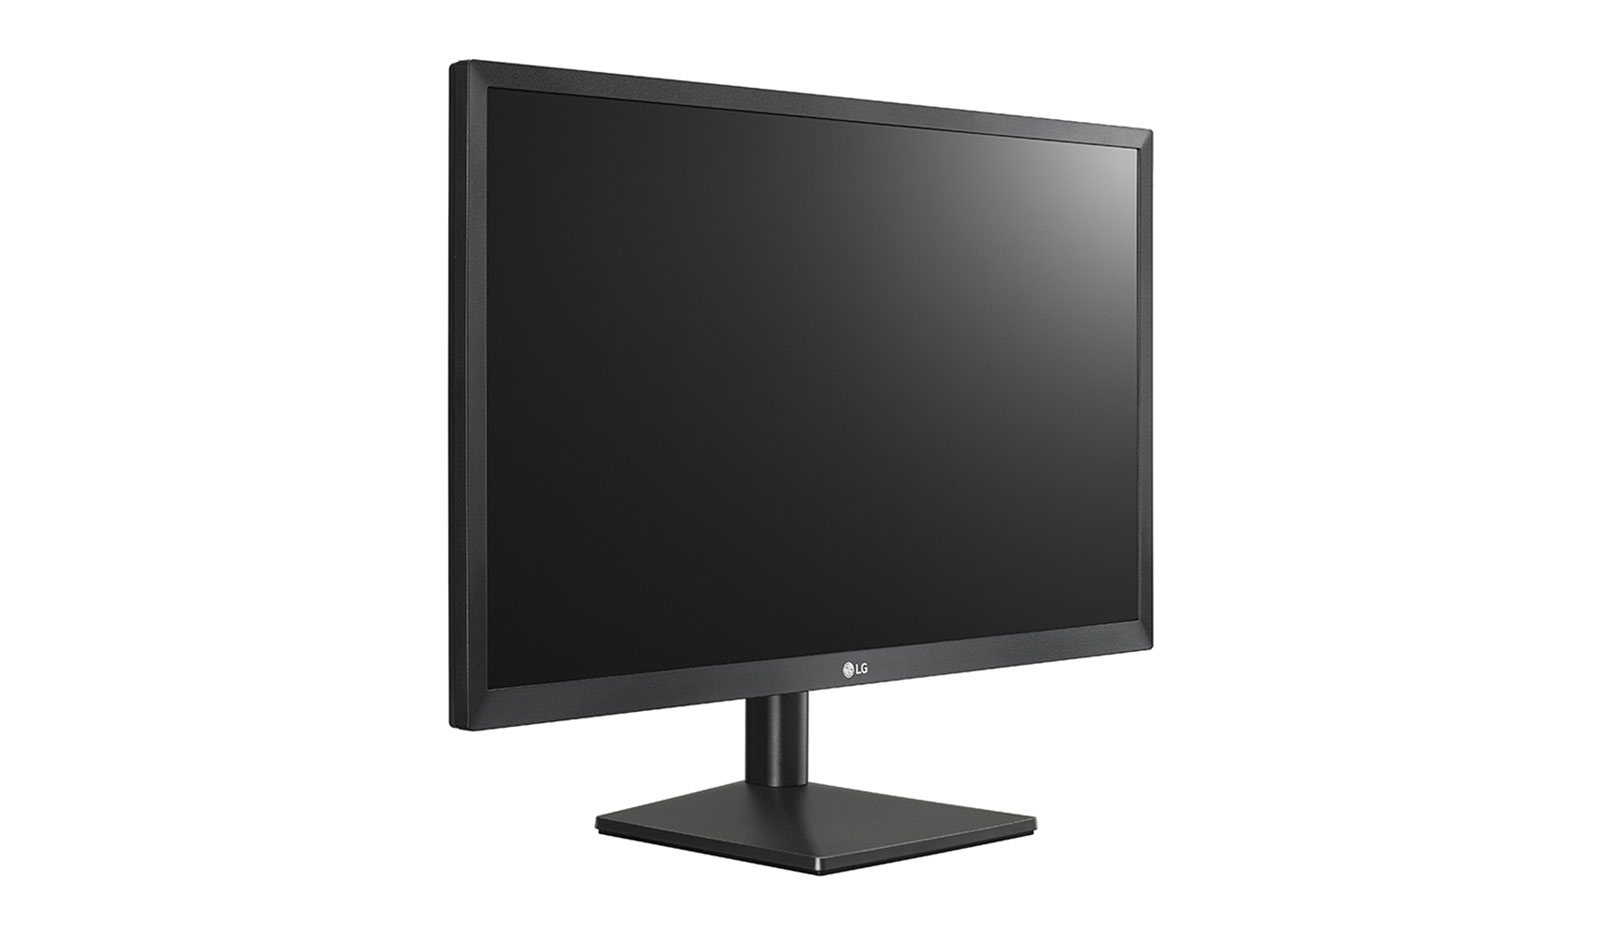 LG 22MK400H-B Monitor PC 55,9 cm (22